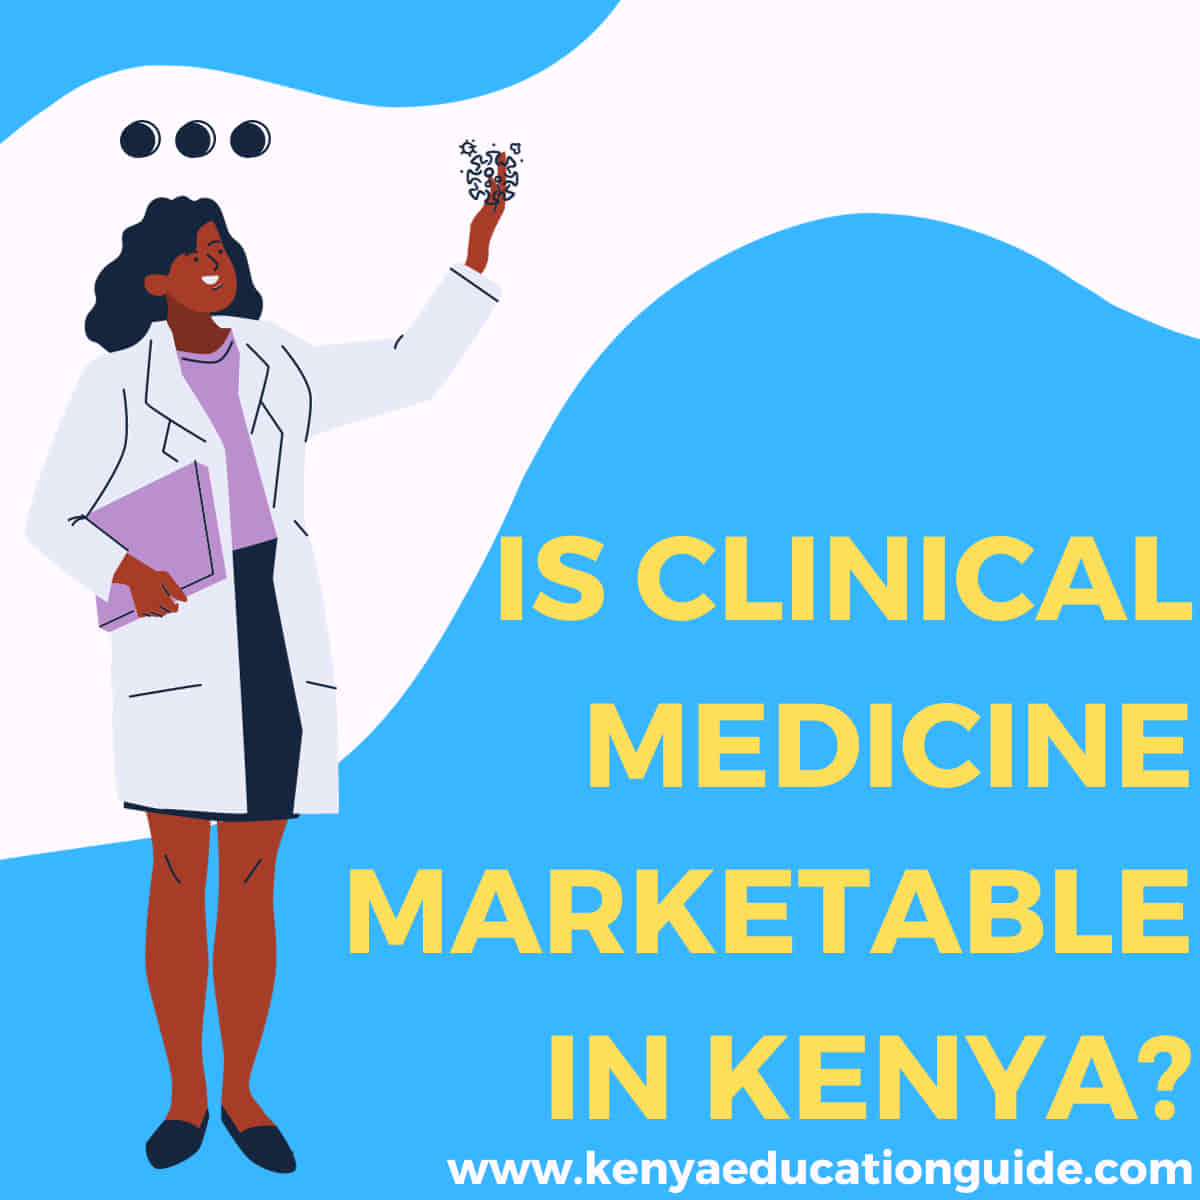 Is clinical medicine marketable in Kenya?